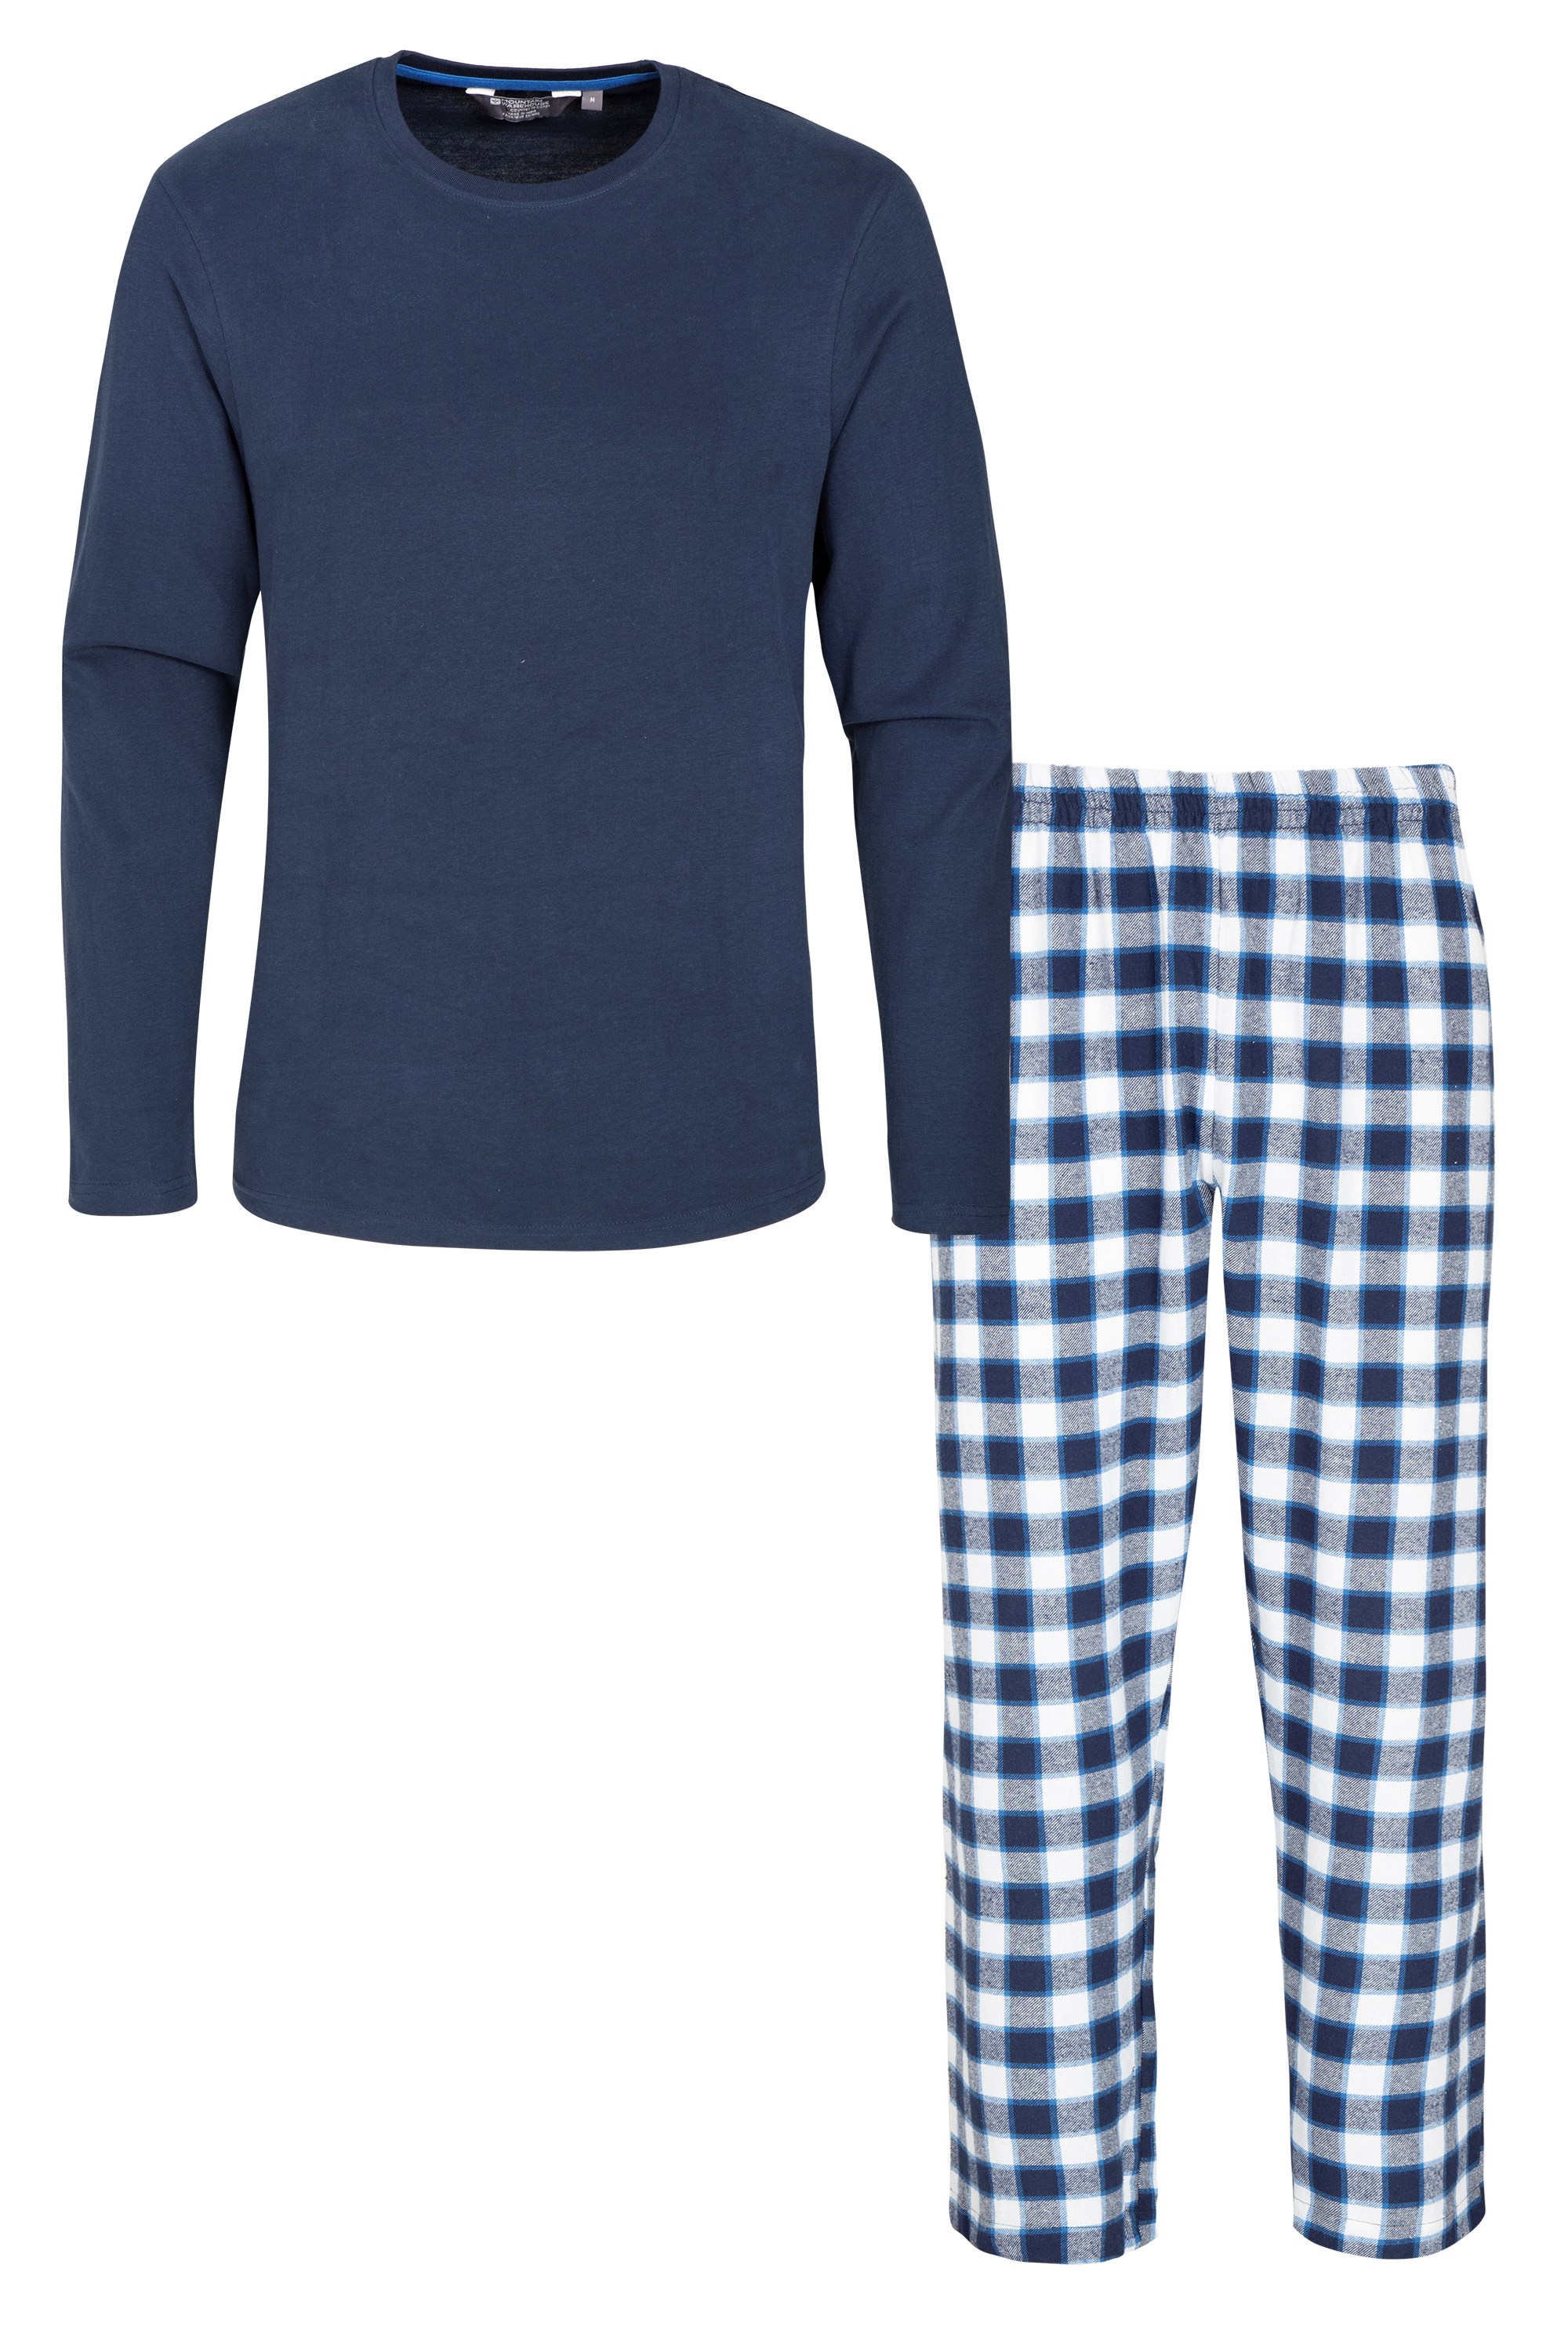 Set de pyjama Hommes Flannel - Bleu